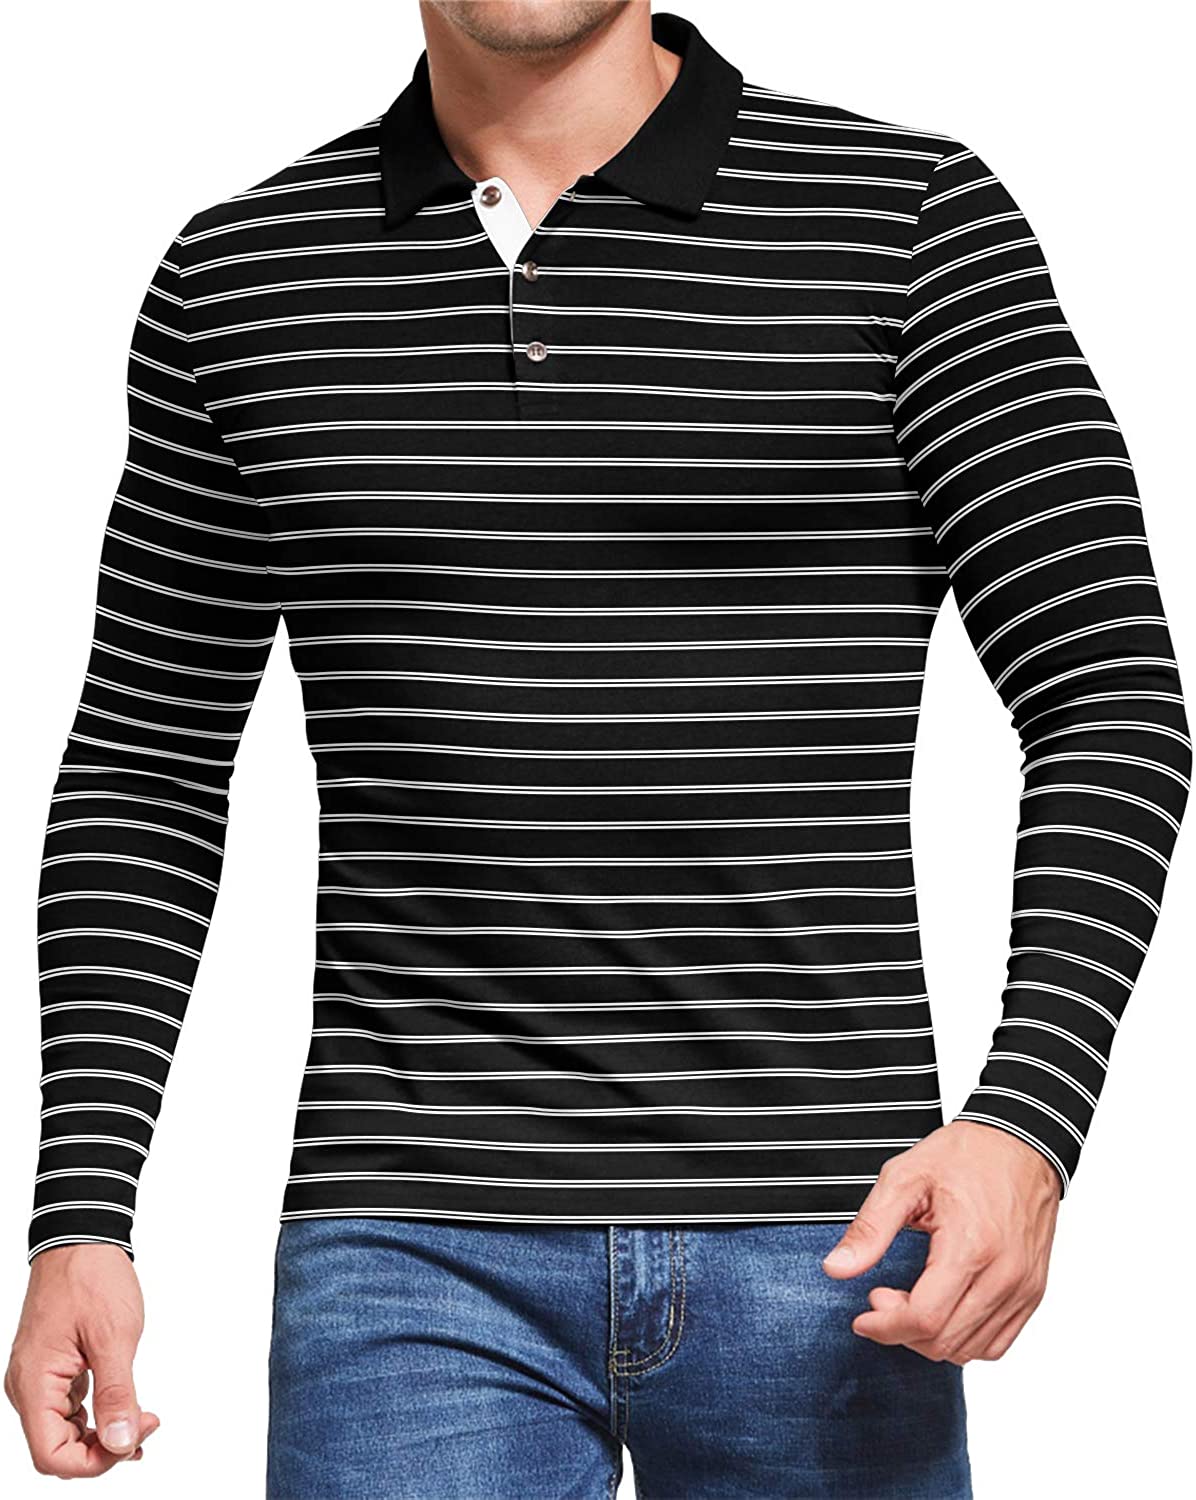 MLANM Men's Polo Shirt Short/Long Sleeve Casual Slim-fit Basic Designed Stripe Cotton Shirts